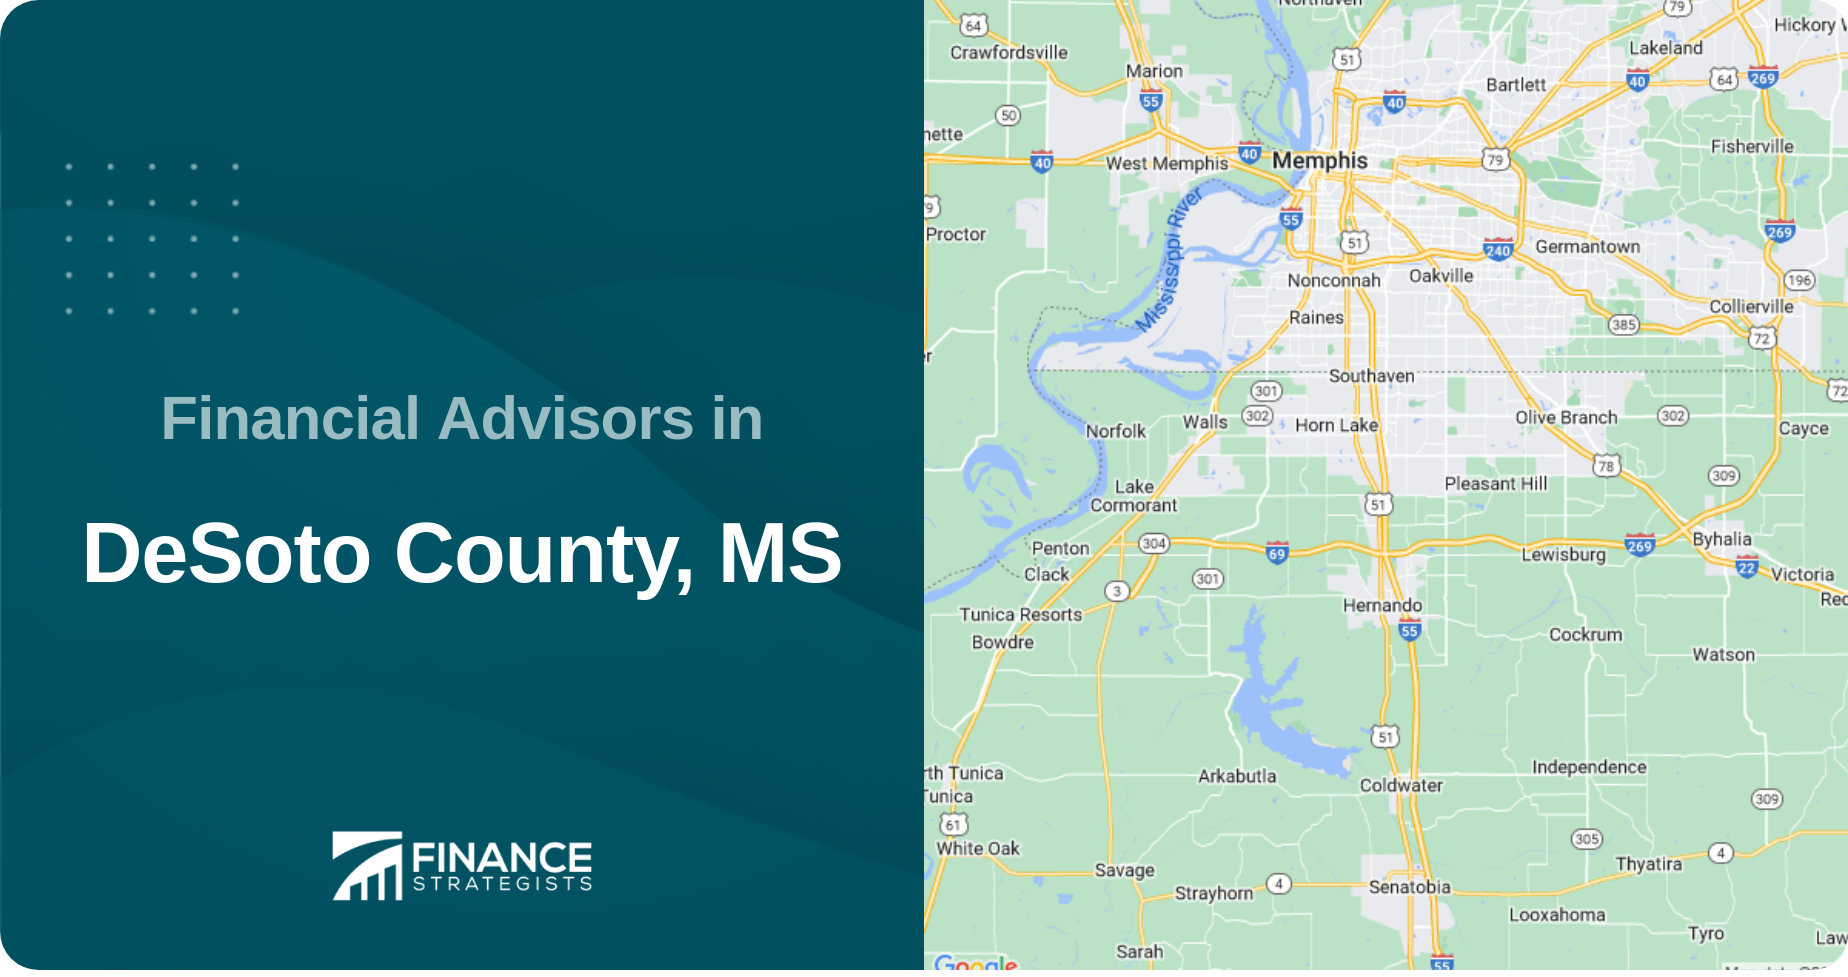 Financial Advisors in DeSoto County, MS